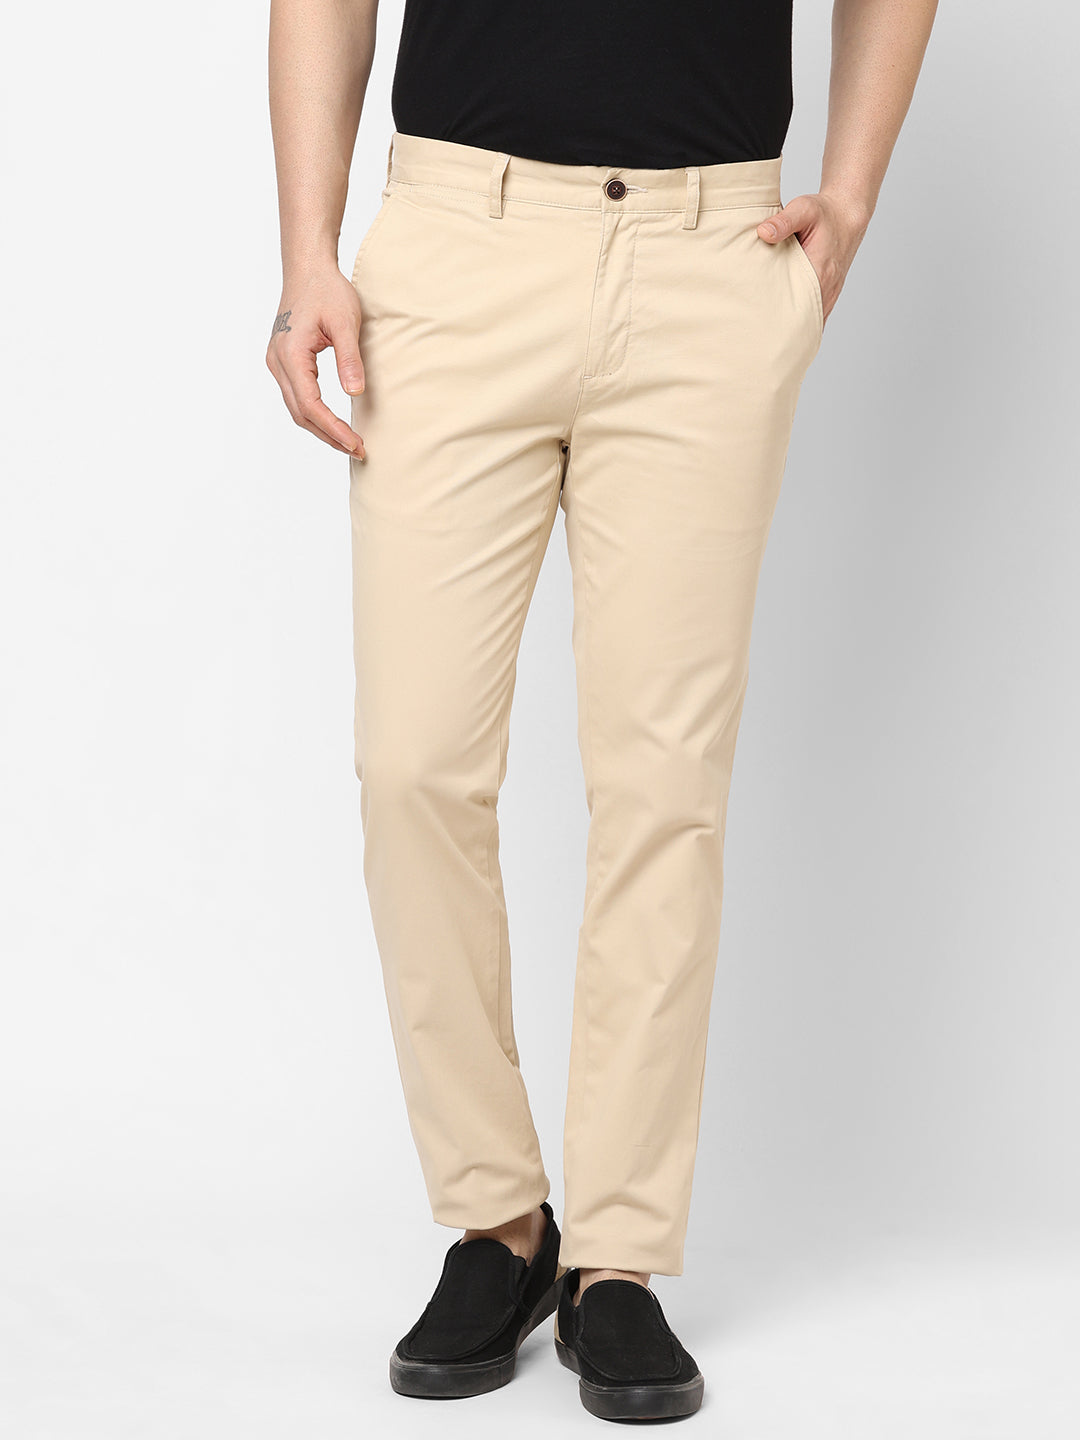 Buy Mens Cotton Lycra Casual Wear Regular Fit Pants